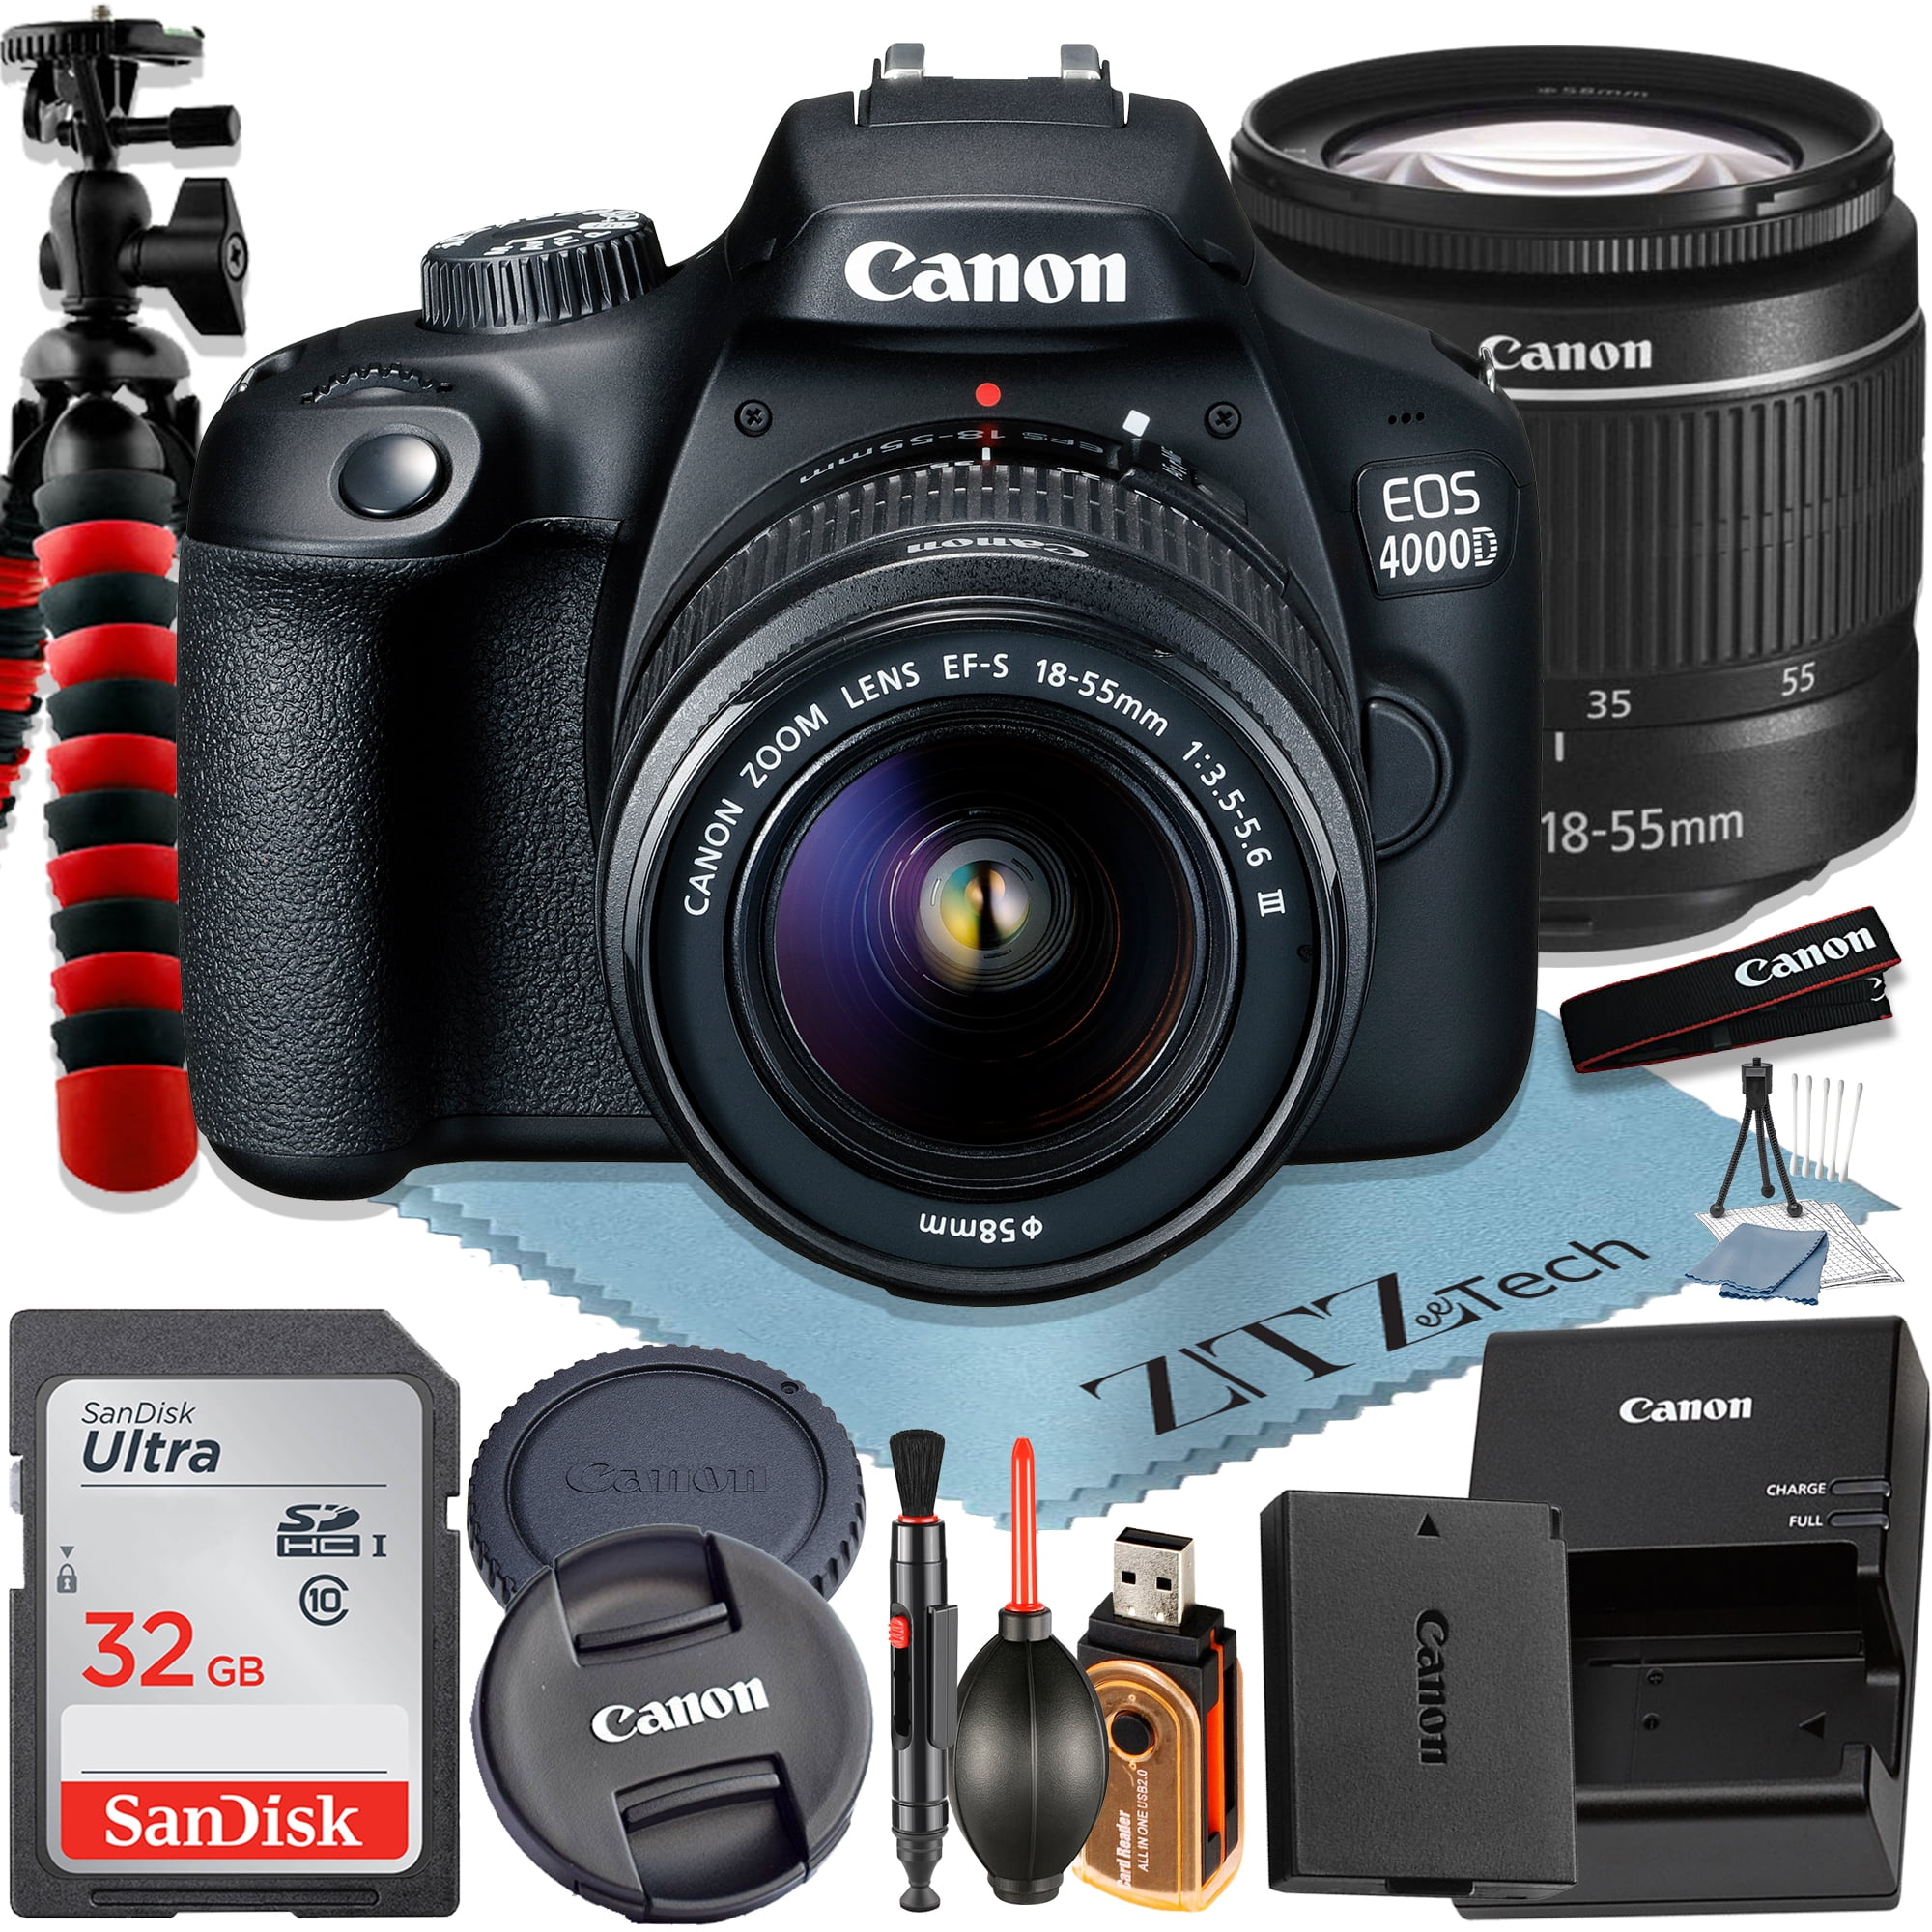 Canon EOS 4000D Rebel T100 18MP DSLR Camera with 18-55mm lens + Flash Top  Bundle